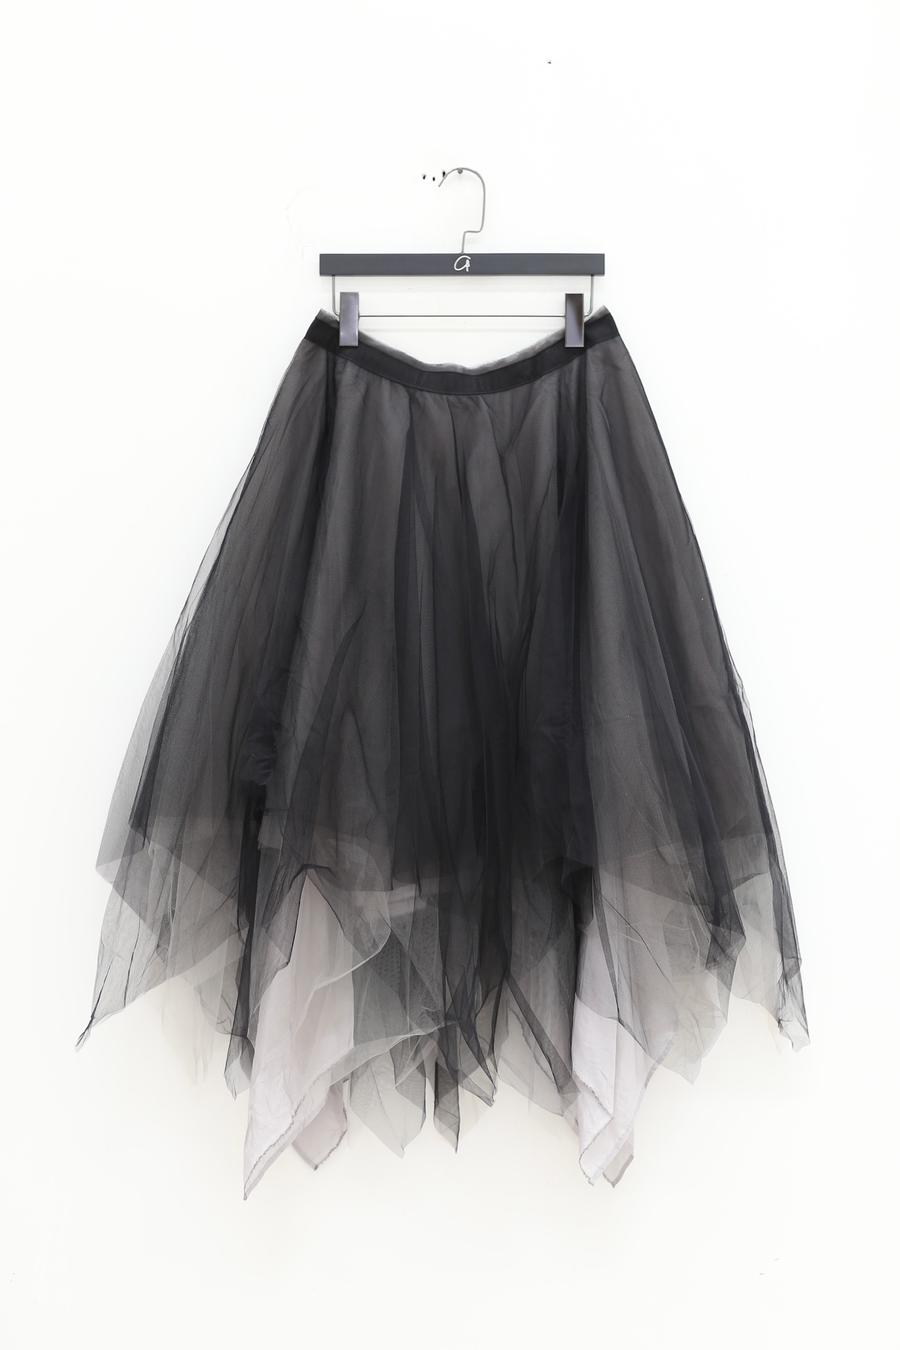 marc le bihan tulle skirt 2591 BLACK/GREY black/grey